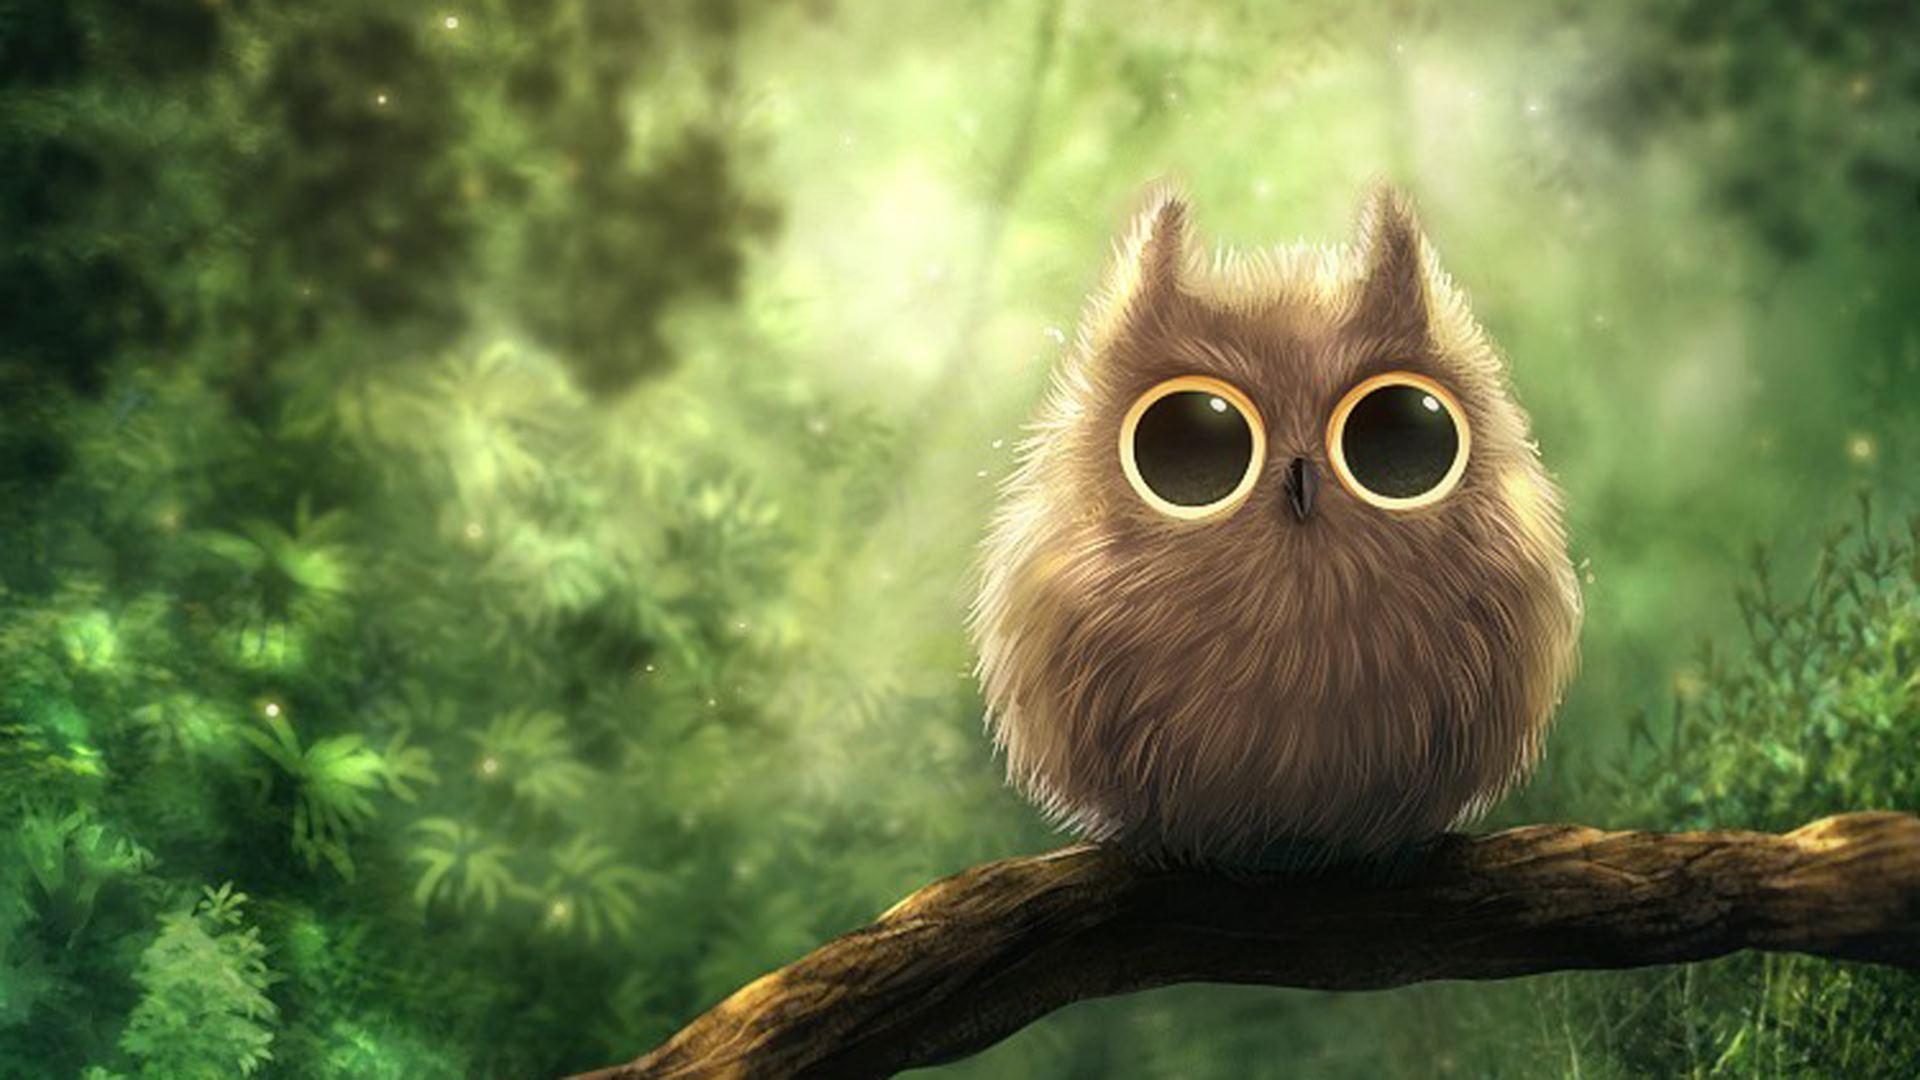 Owl Art Wallpapers Top Free Owl Art Backgrounds Wallpaperaccess